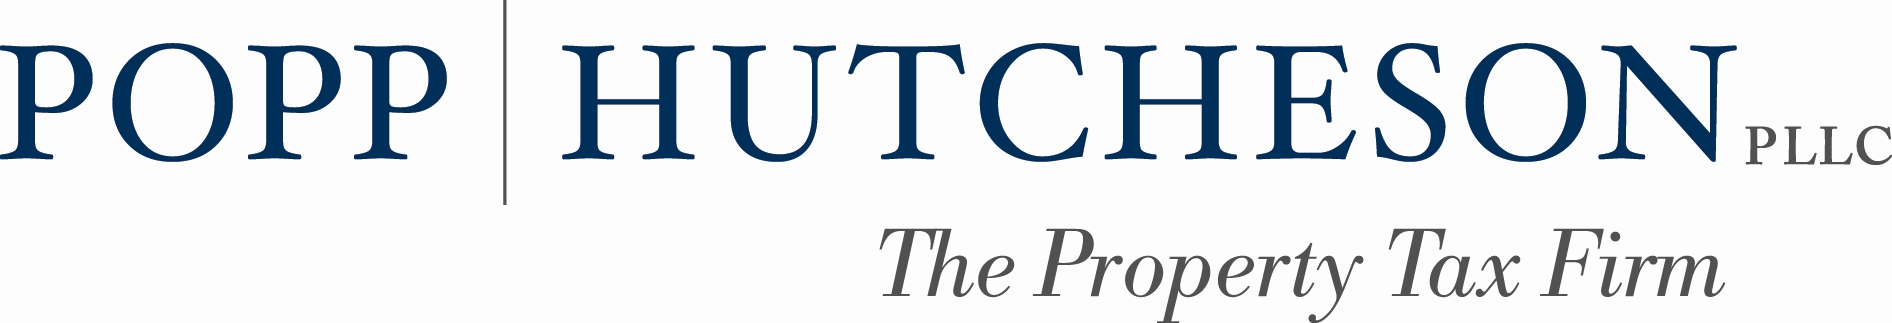 Popp Hutcheson Logo.Tagline.JPG